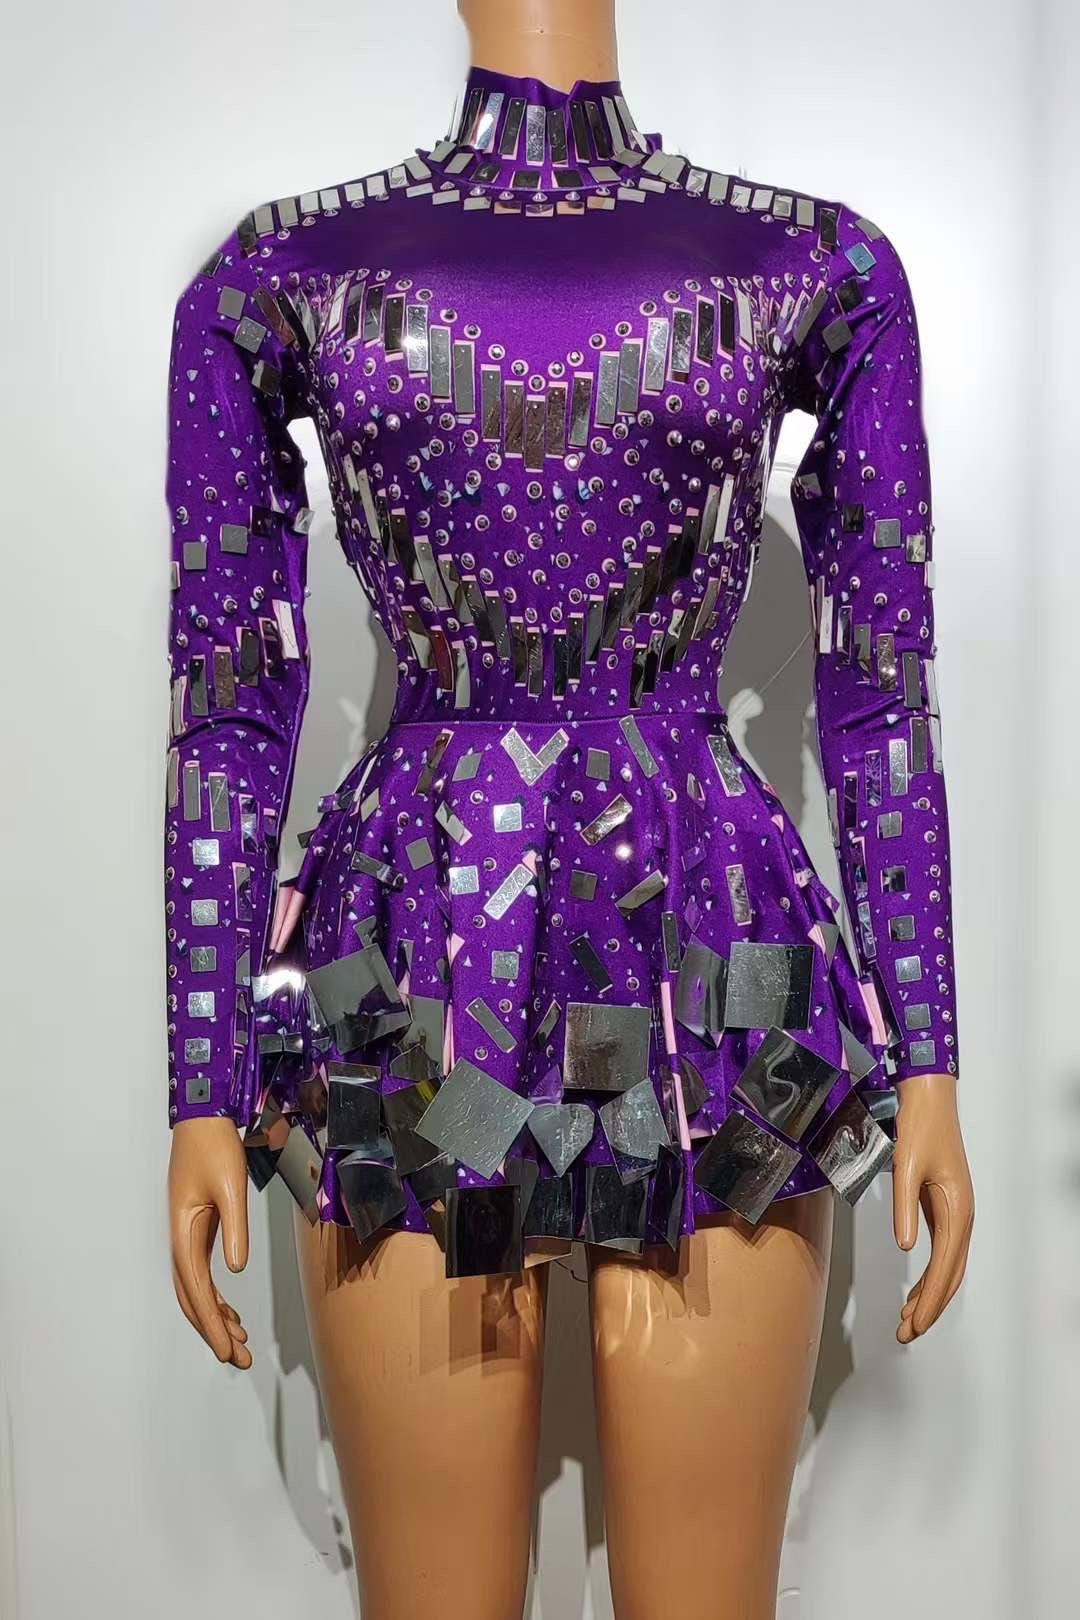 Disco Purple and Silver remix dress